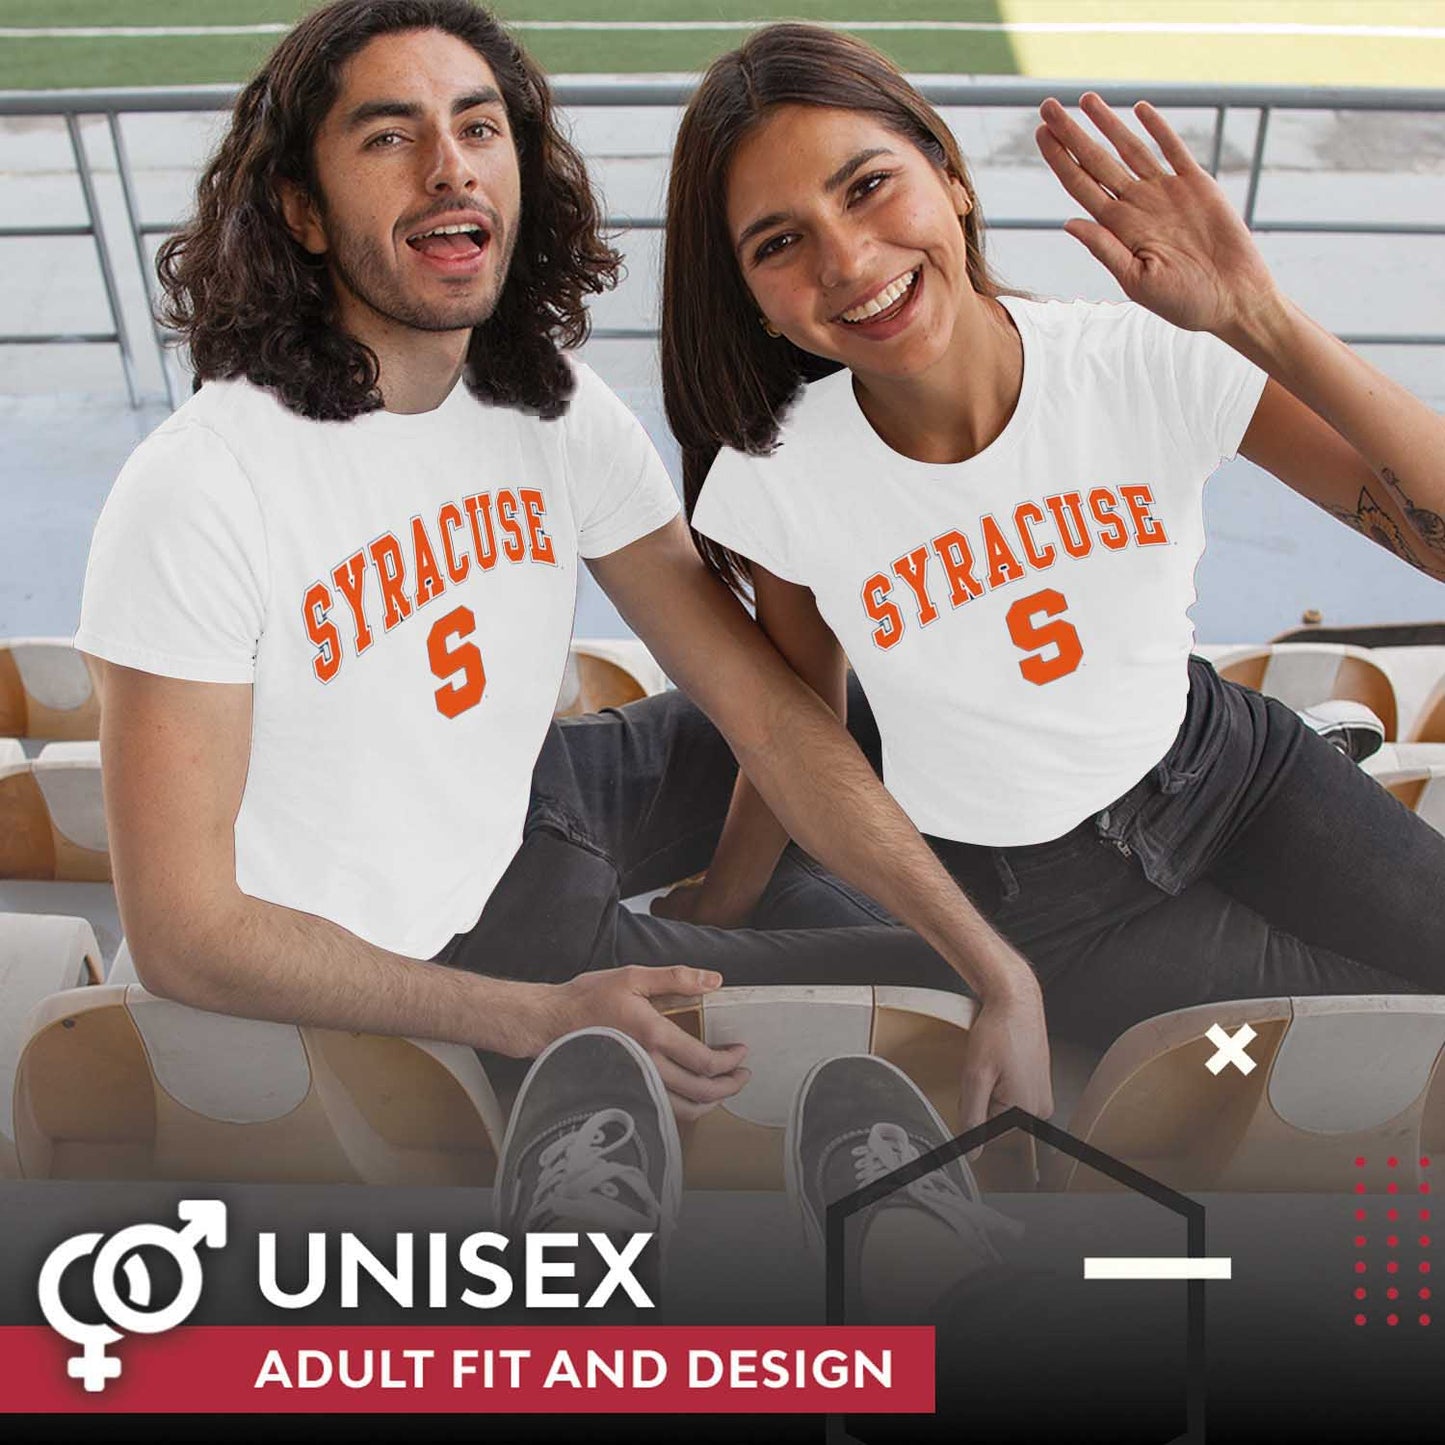 Syracuse Orange NCAA Adult Gameday Cotton T-Shirt - White